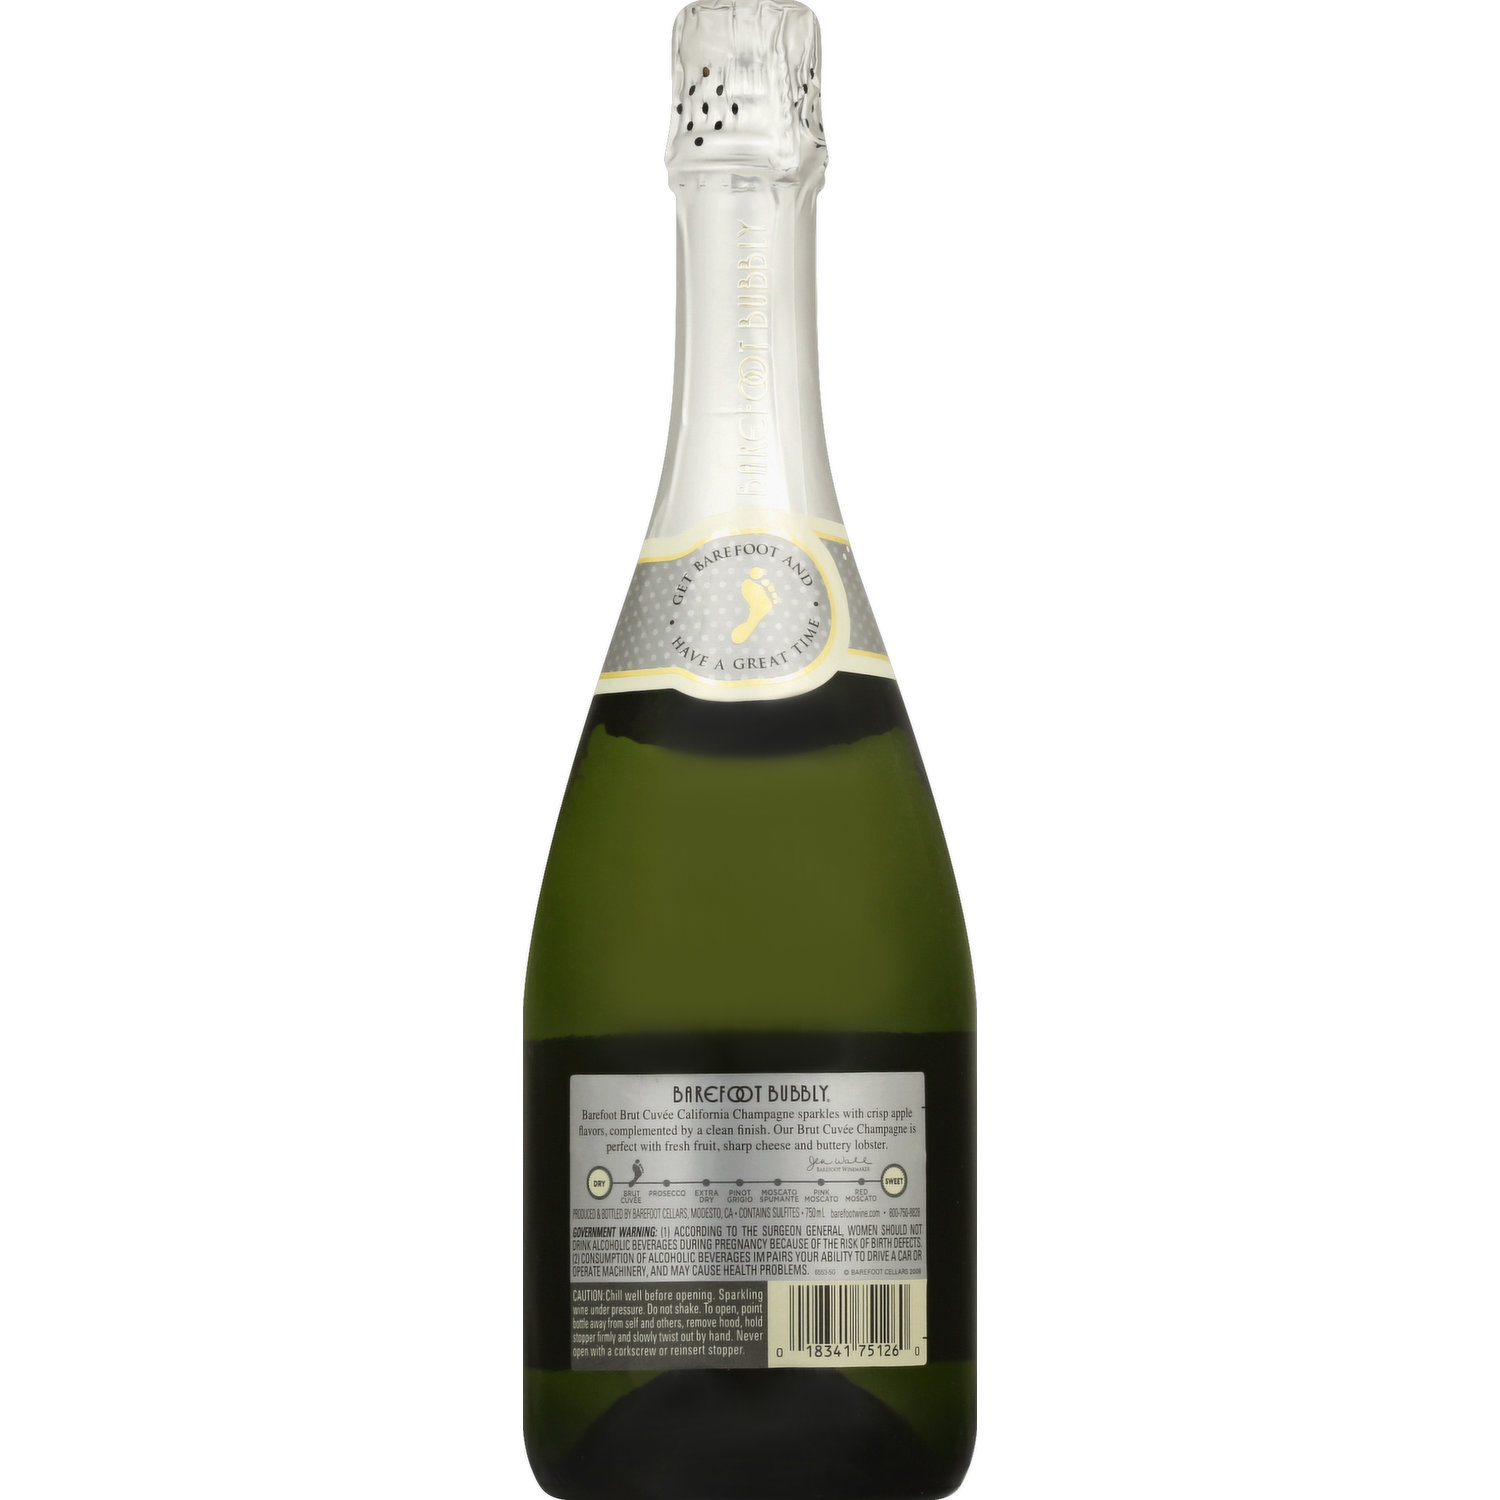 Barefoot Bubbly Brut Cuvee California Champagne Wine, 750ml Glass Bottle 